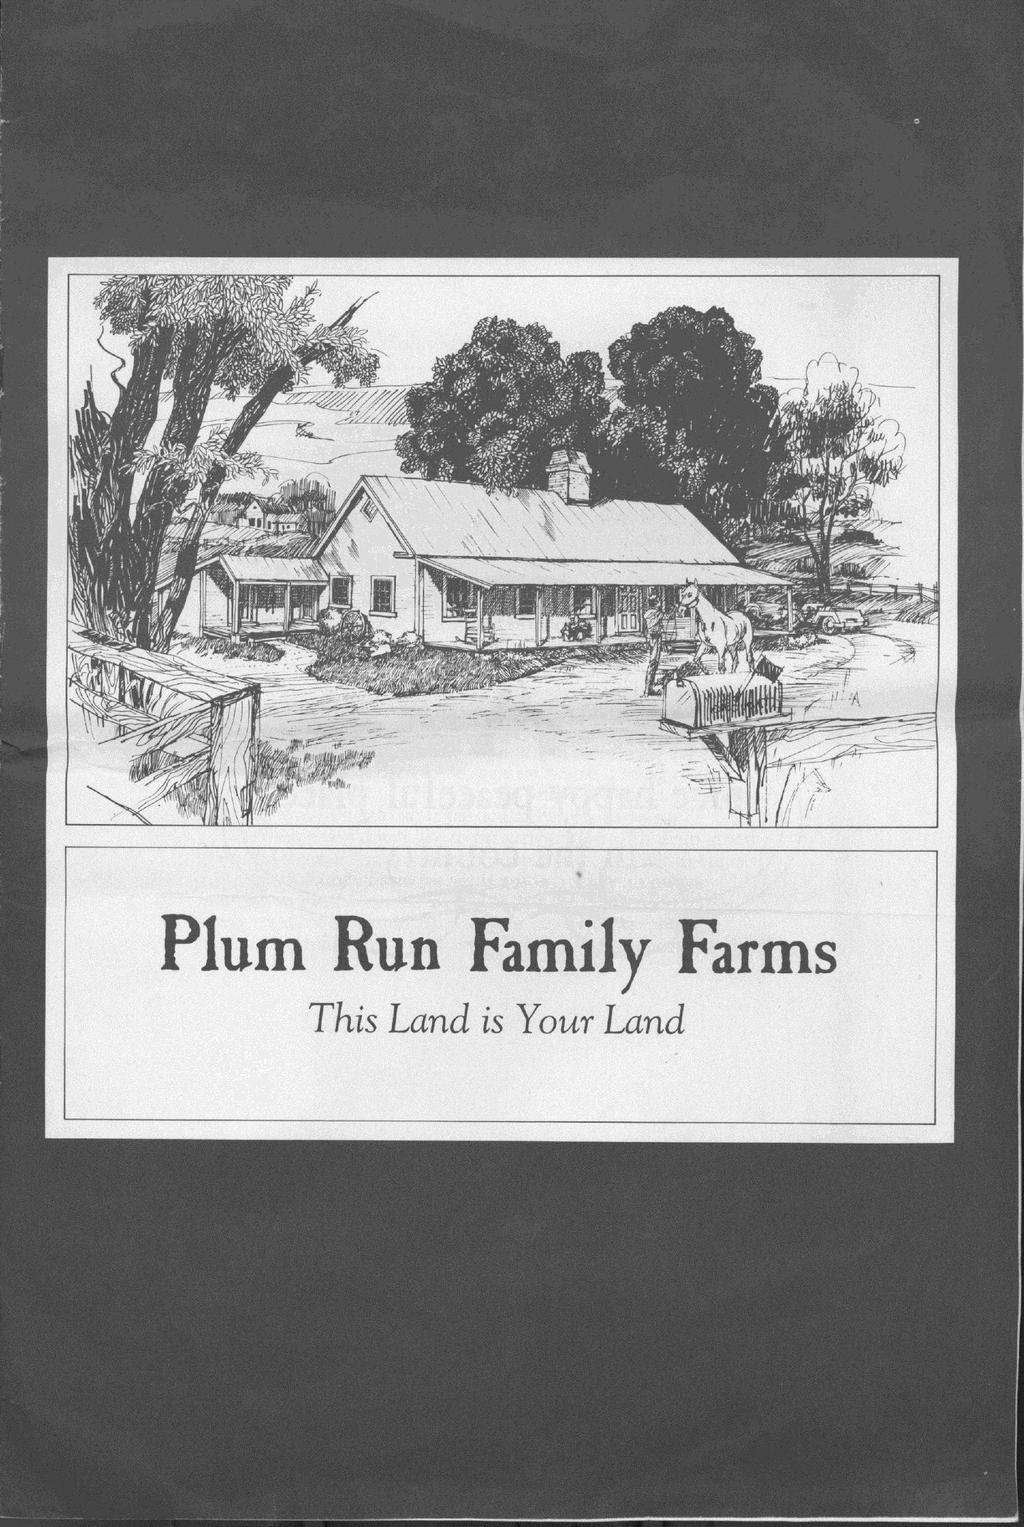 Plum Run Family Farms